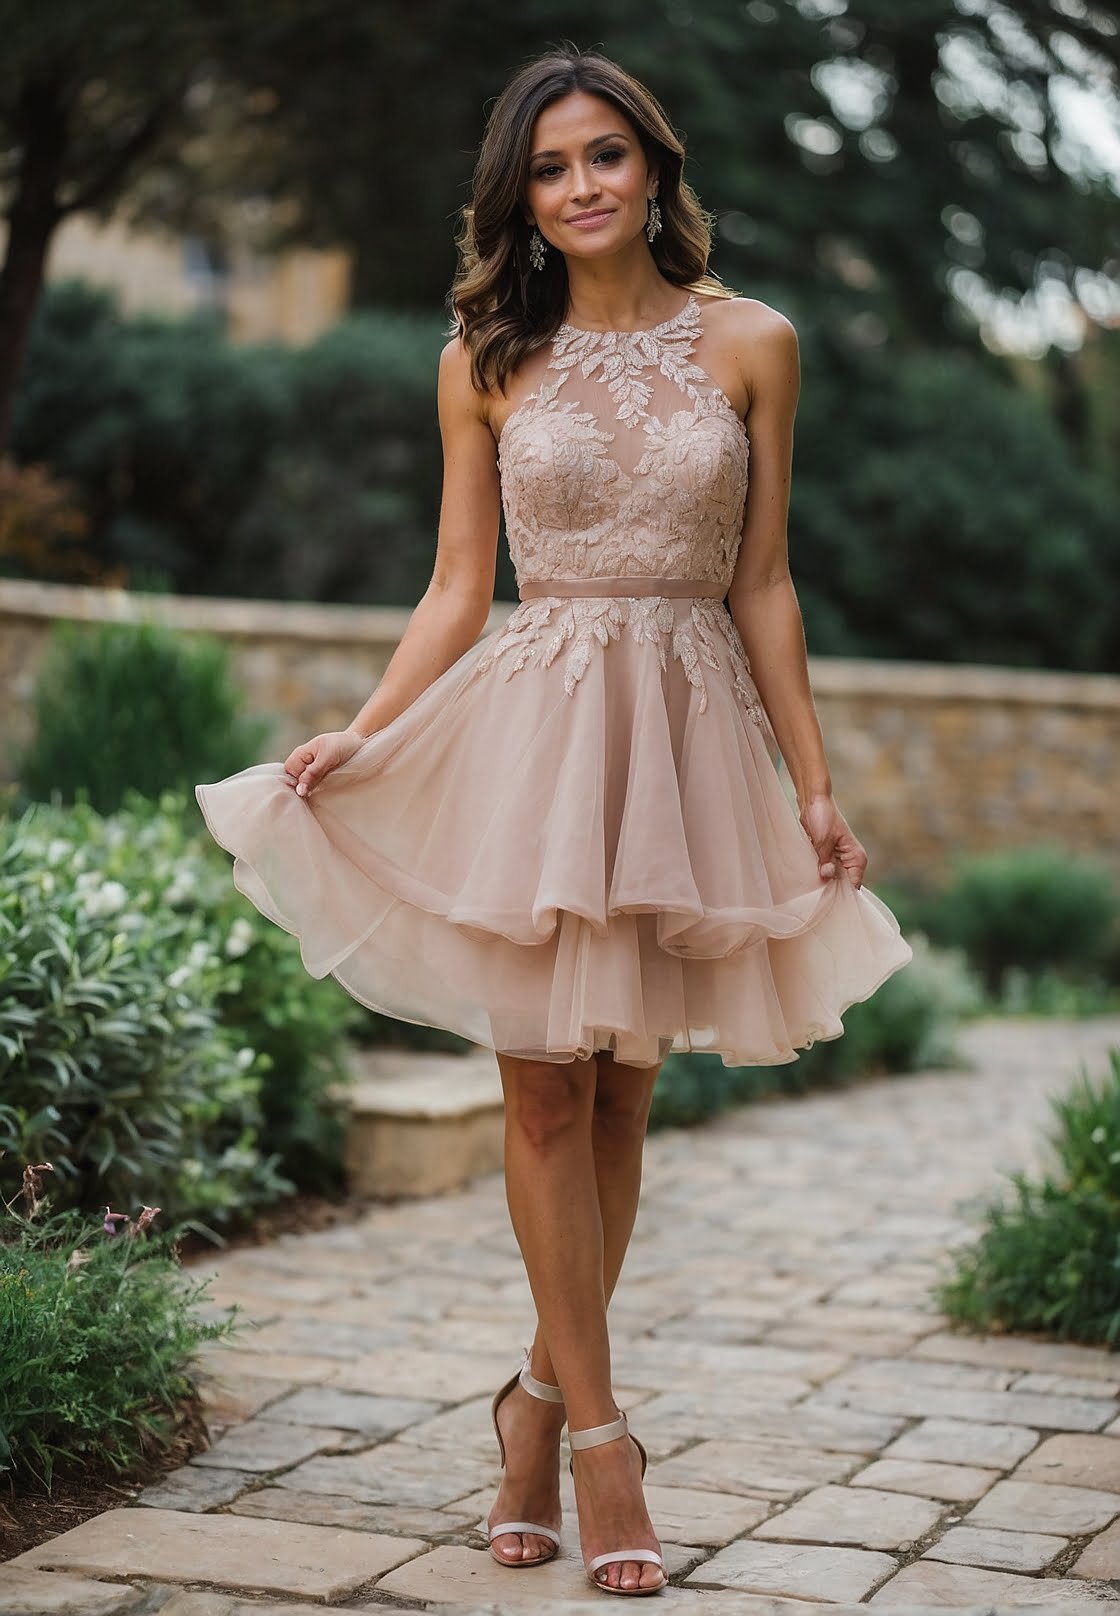 Blush Beauty: Playful Lace Cocktail Dress